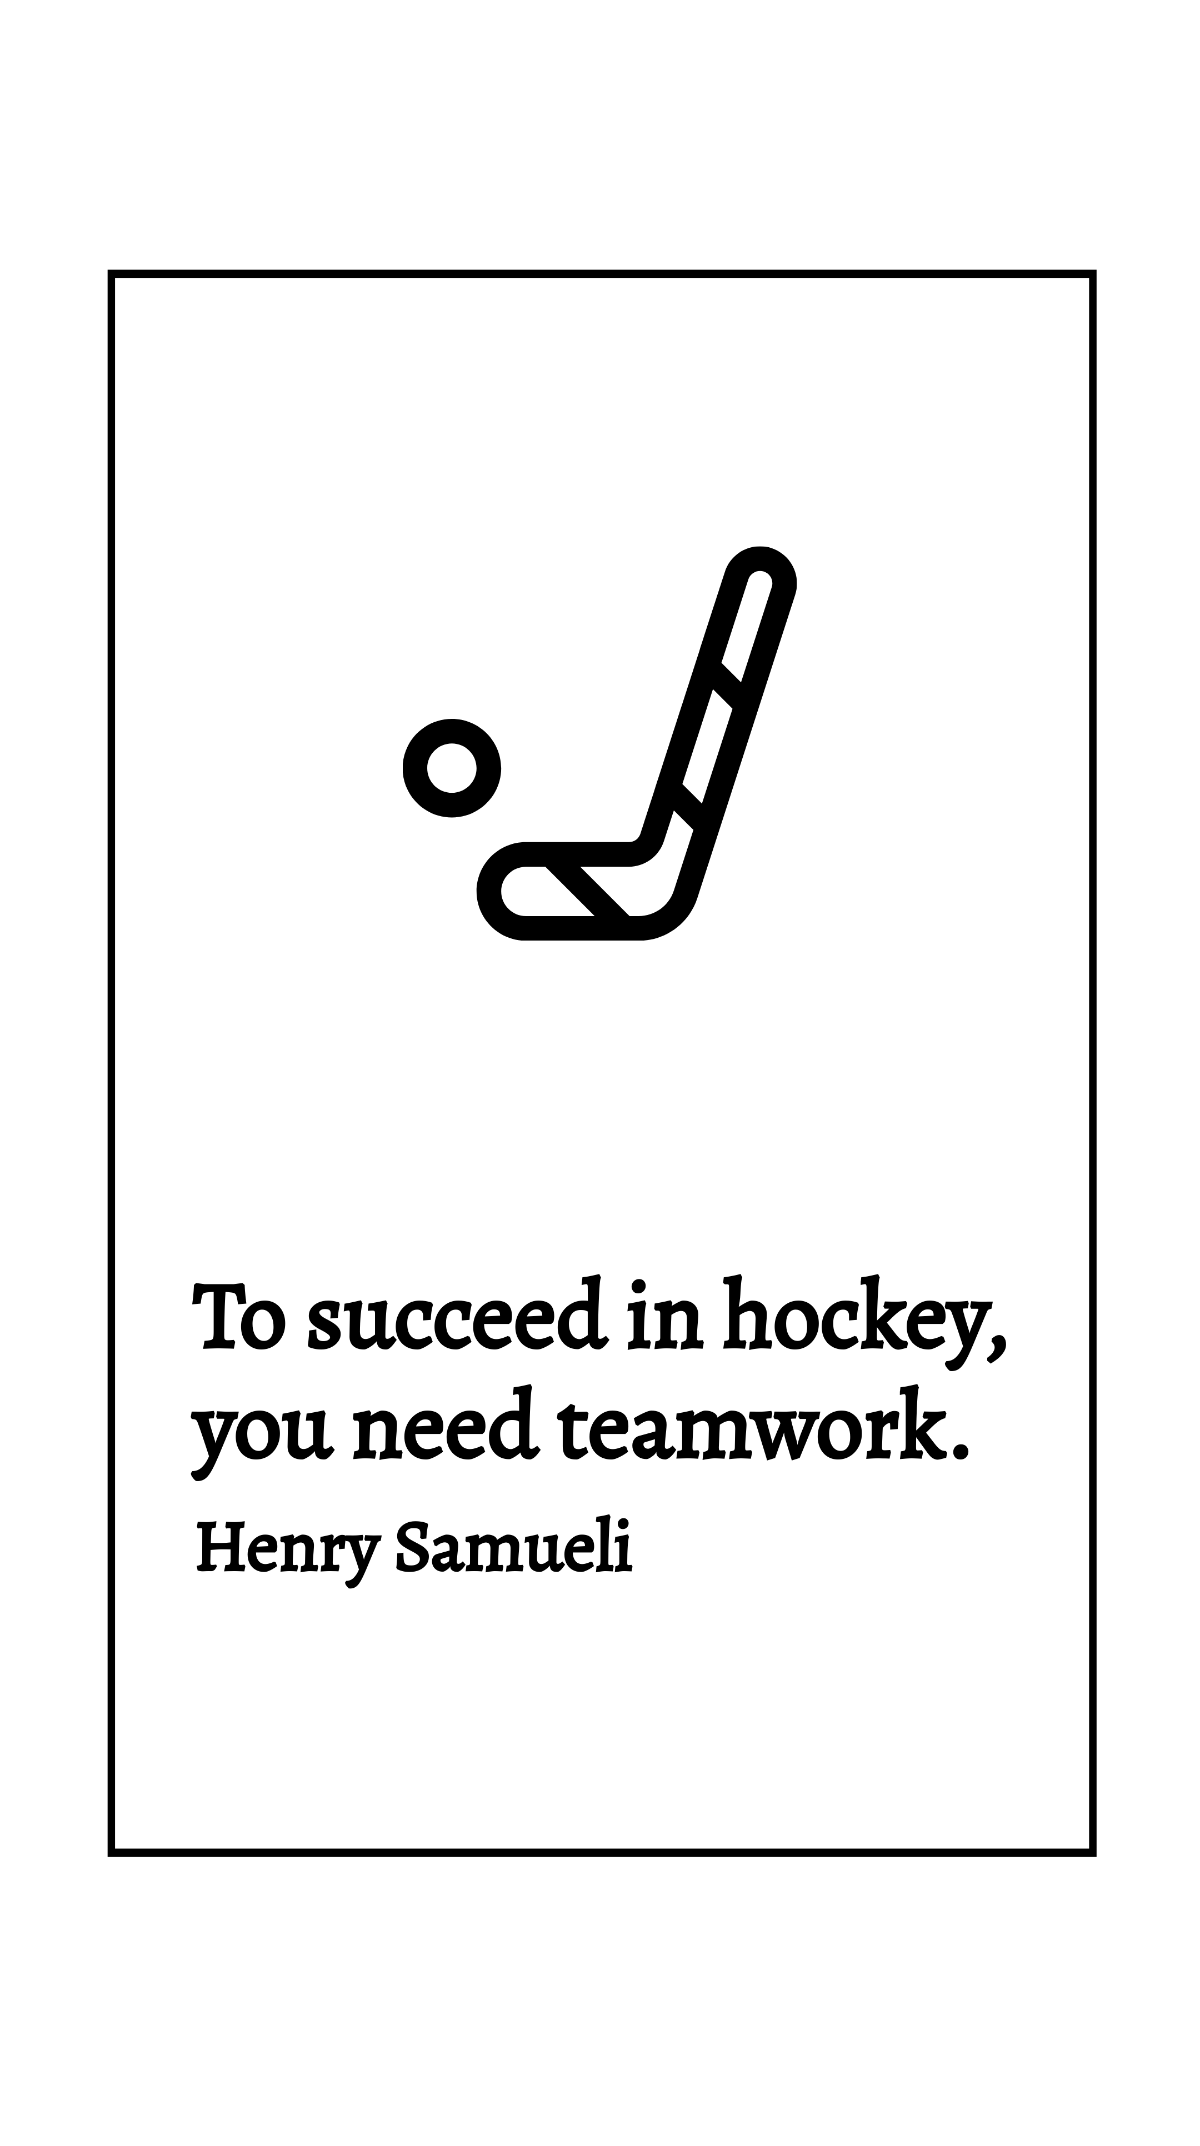 Henry Samueli - To succeed in hockey, you need teamwork. Template